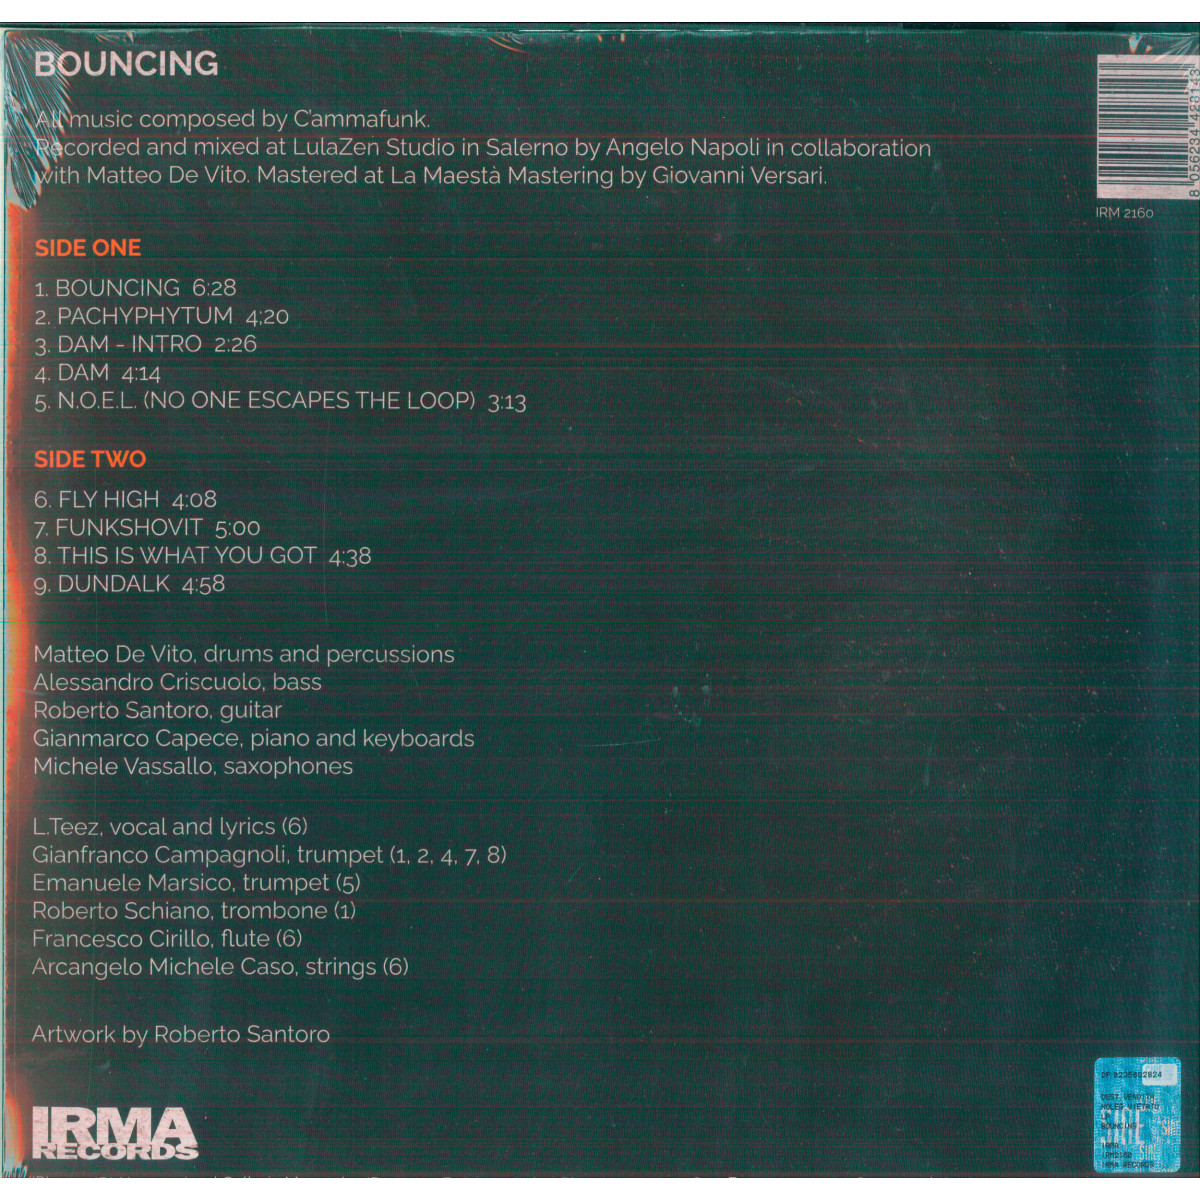 C'ammafunk LP Vinile Bouncing / Irma Records – IRM 2160